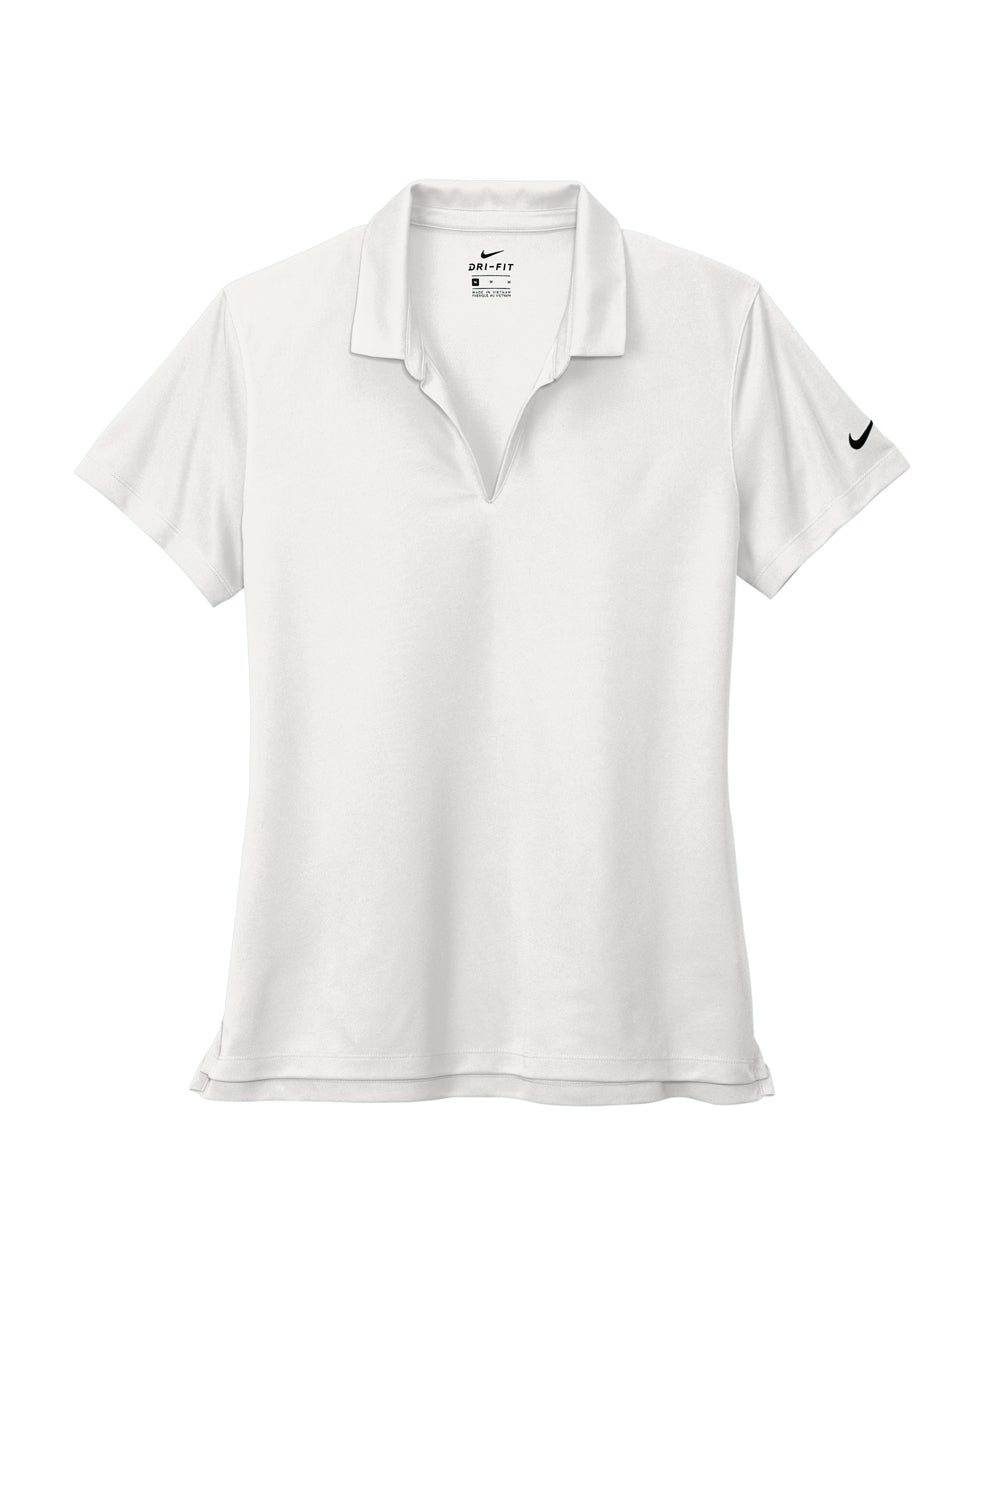 Nike NKDC1991 Womens Dri-Fit Moisture Wicking Micro Pique 2.0 Short Sleeve Polo Shirt White Flat Front